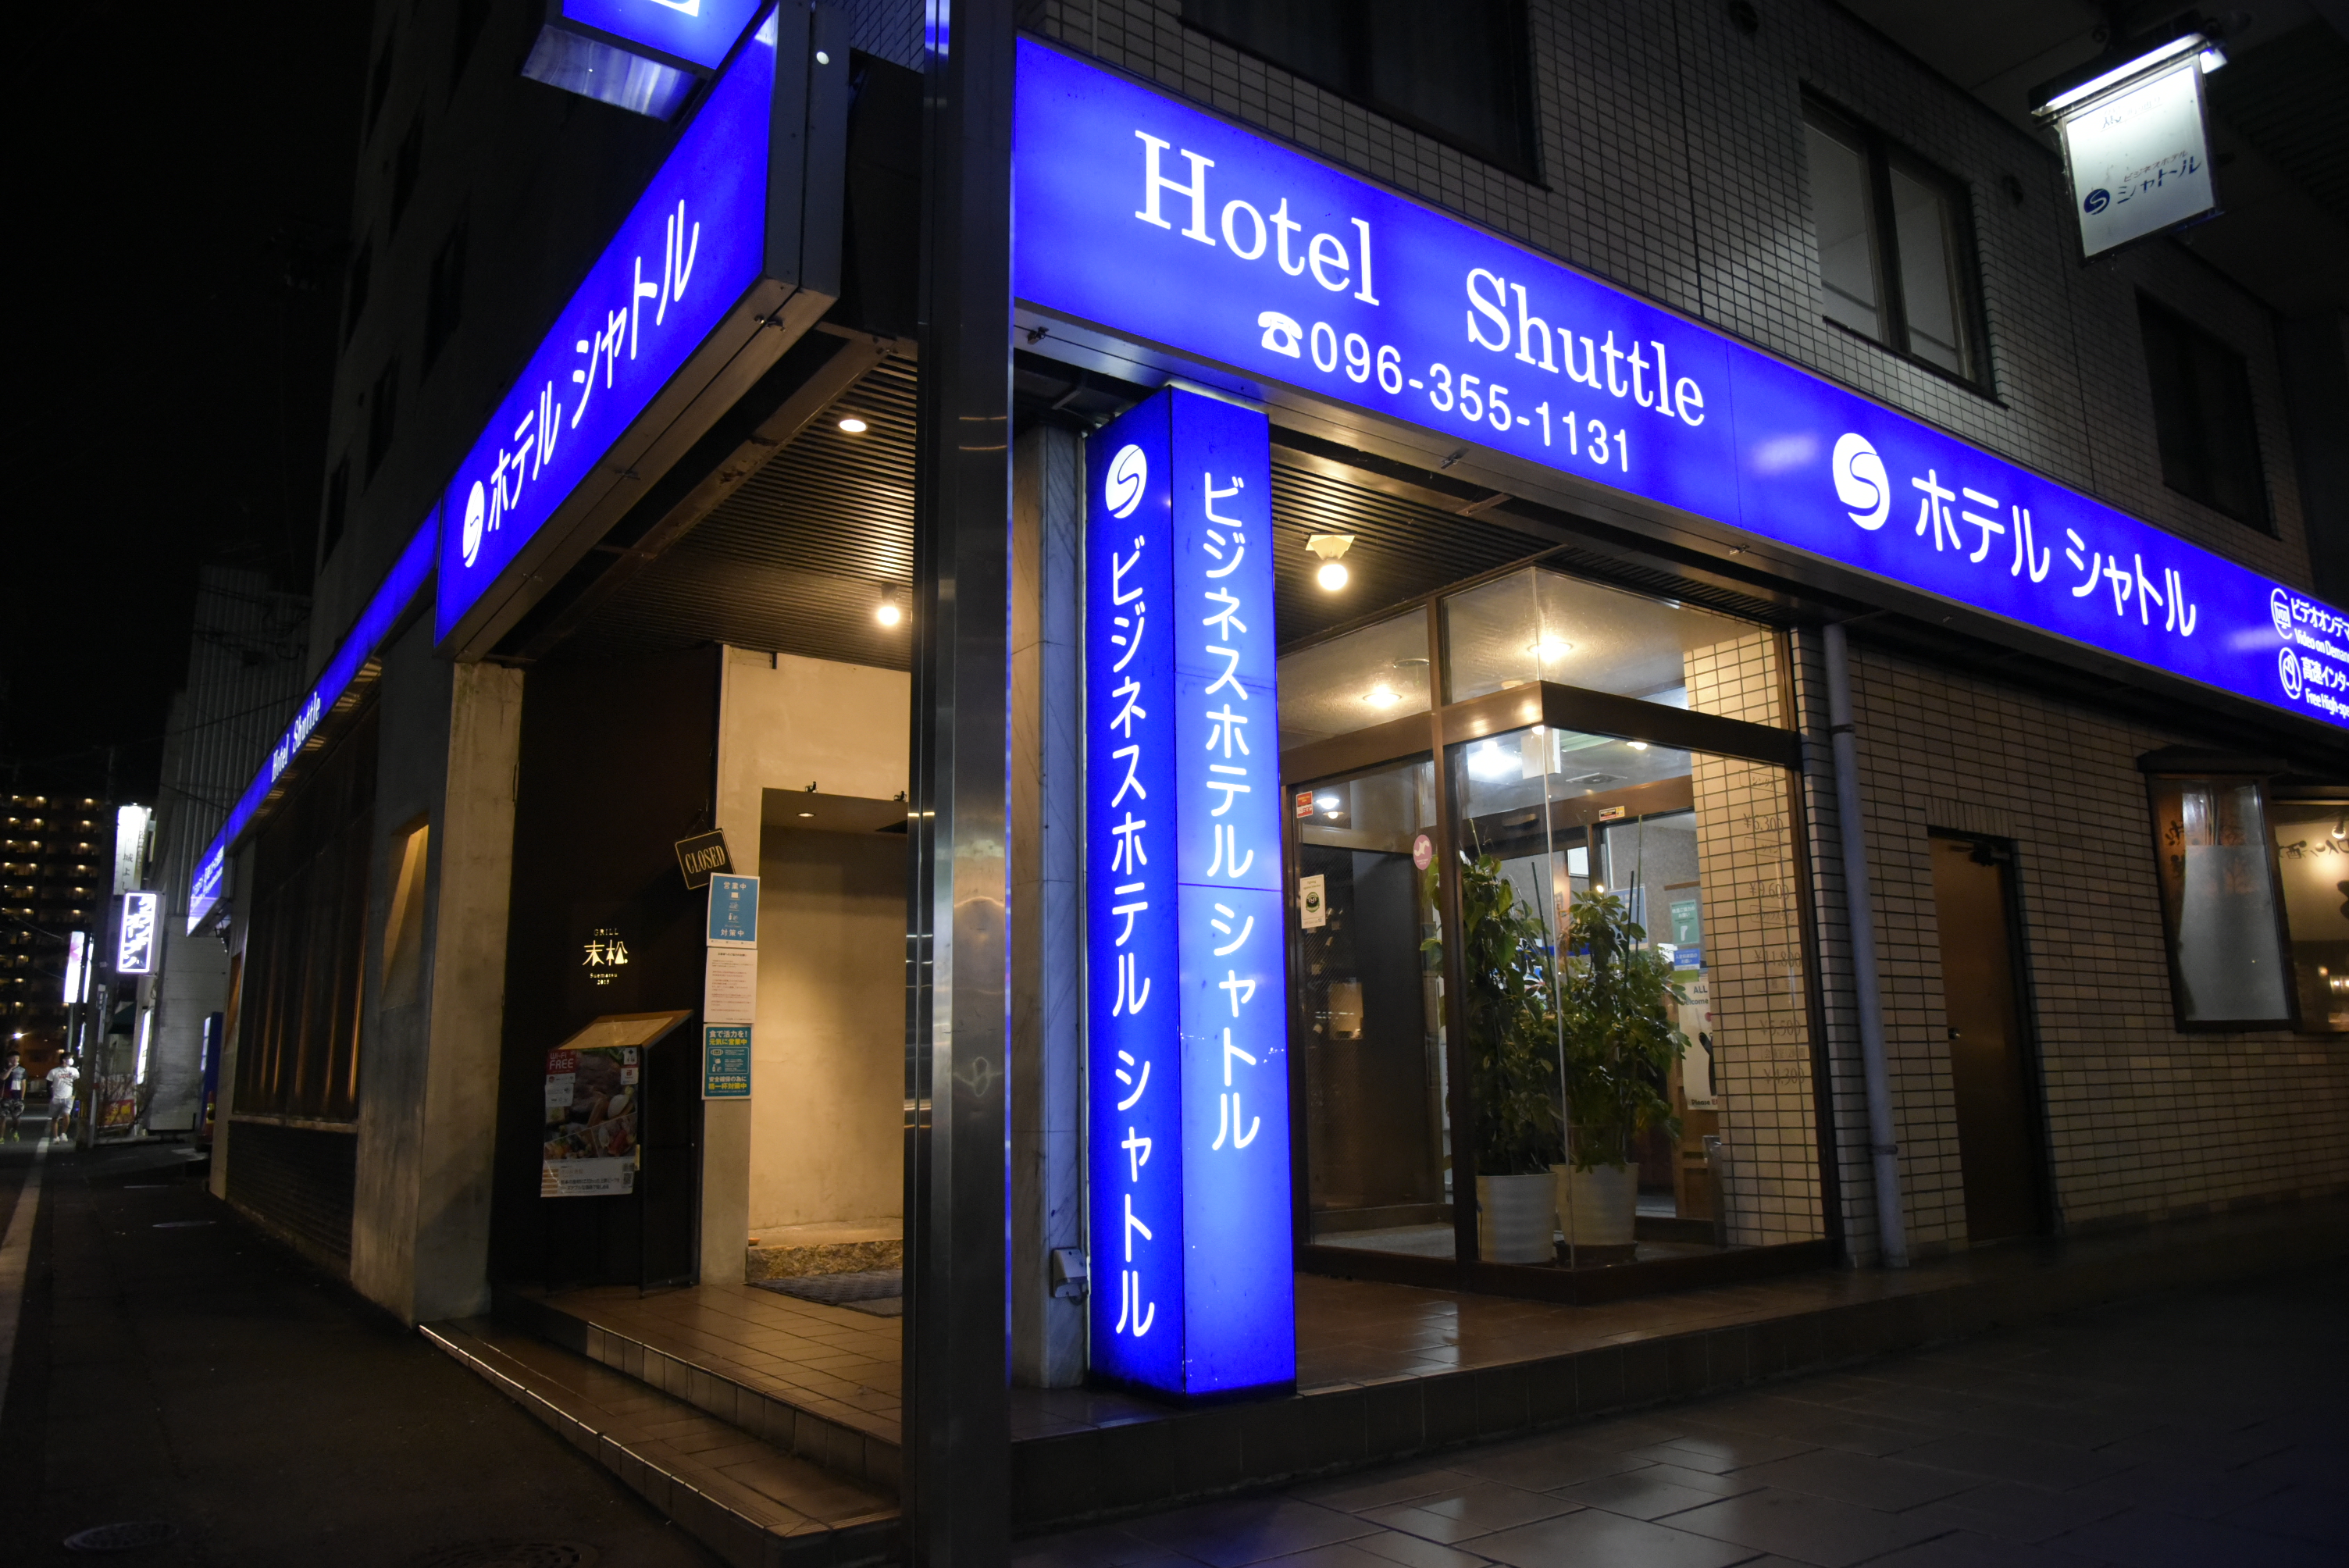 Business Hotel Shuttle